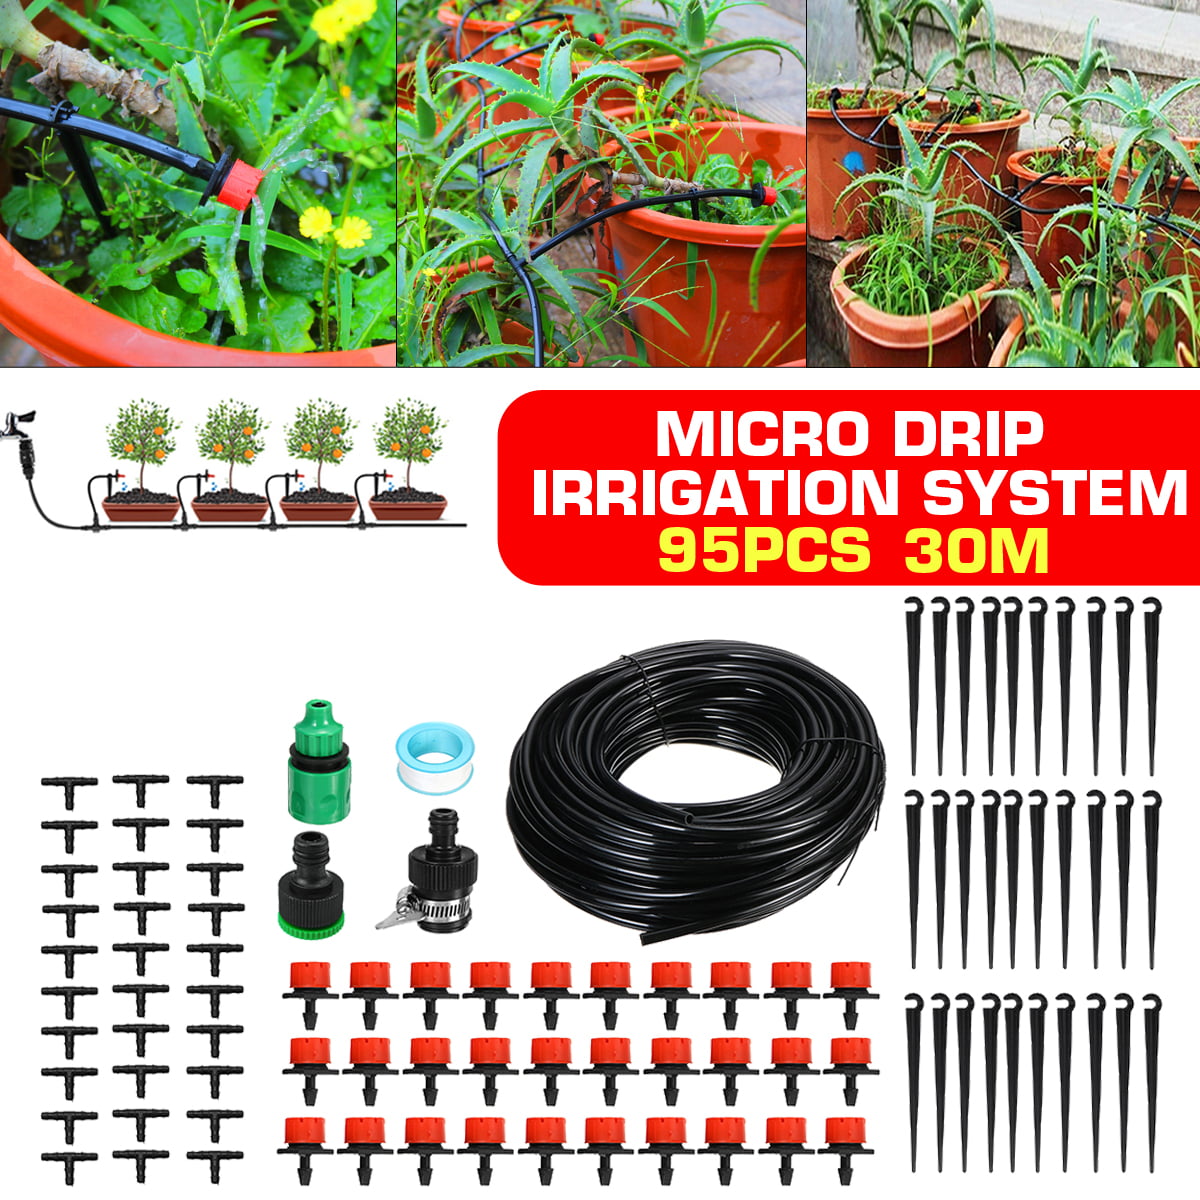 100ft 30M Auto Drip Irrigation System Kit Micro Sprinkler Garden Watering Set 